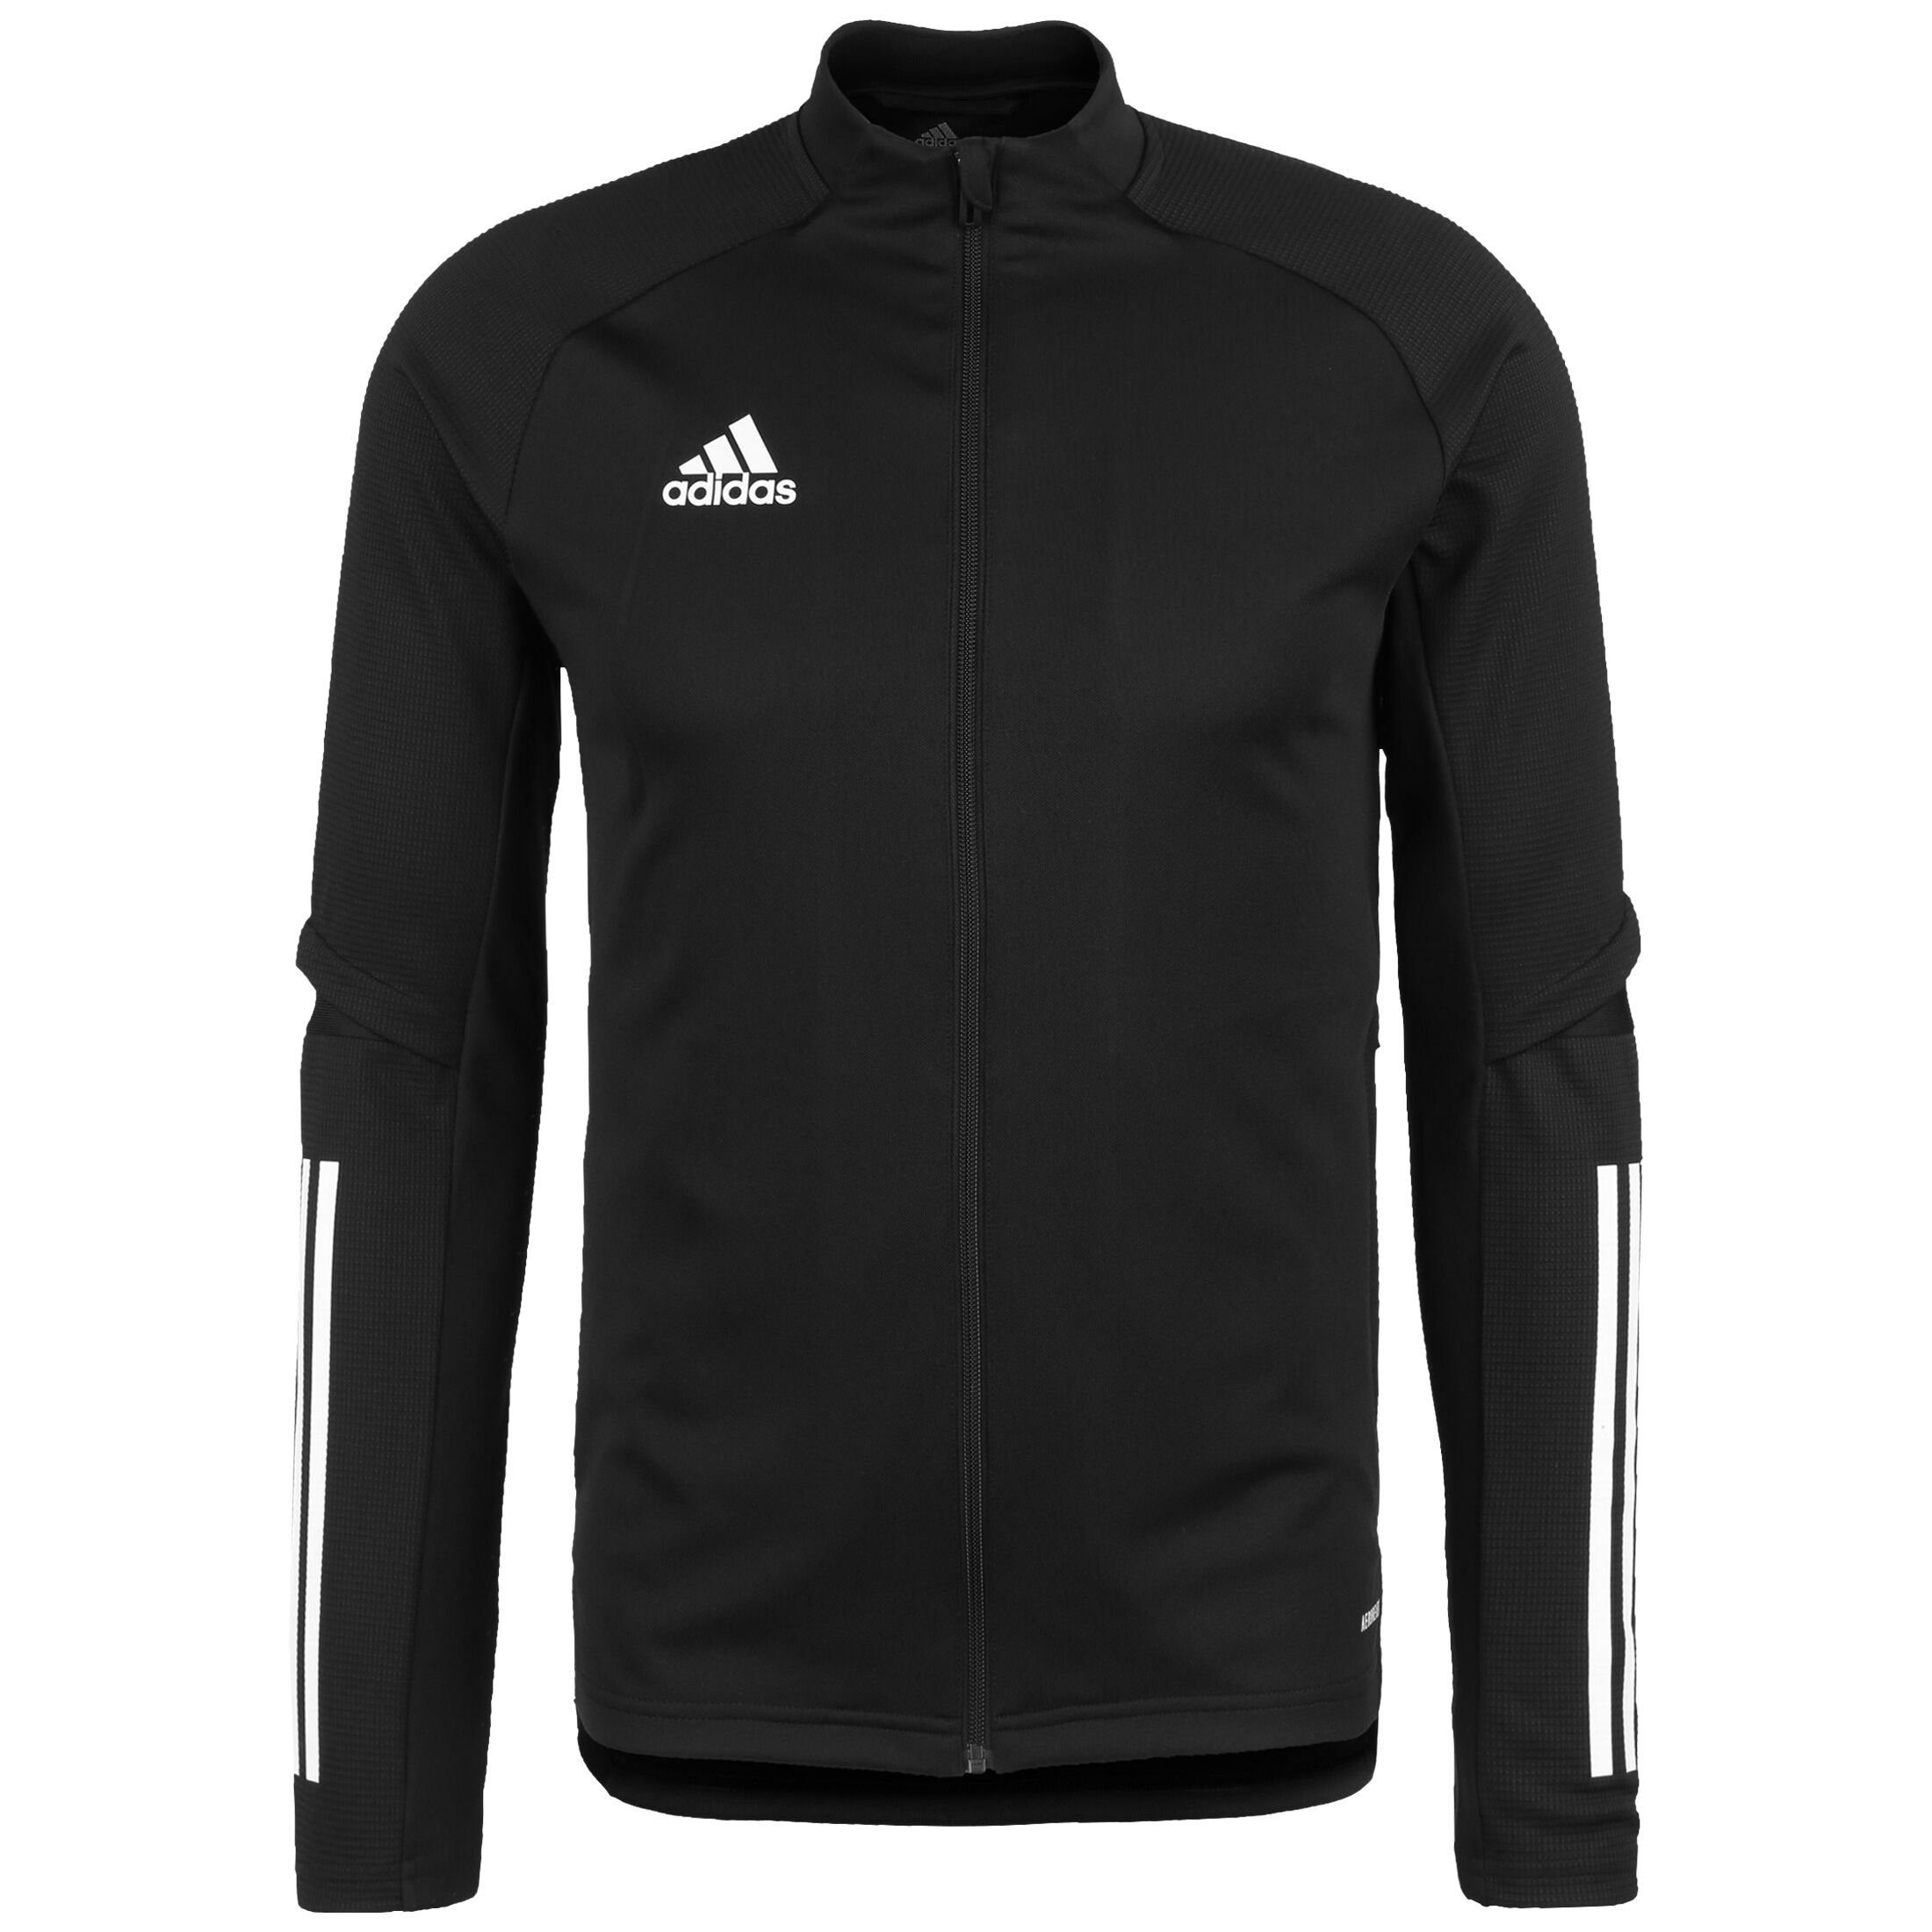 adidas schwarz Trainingsjacke Herren 20 Performance / weiß Sweatjacke Condivo